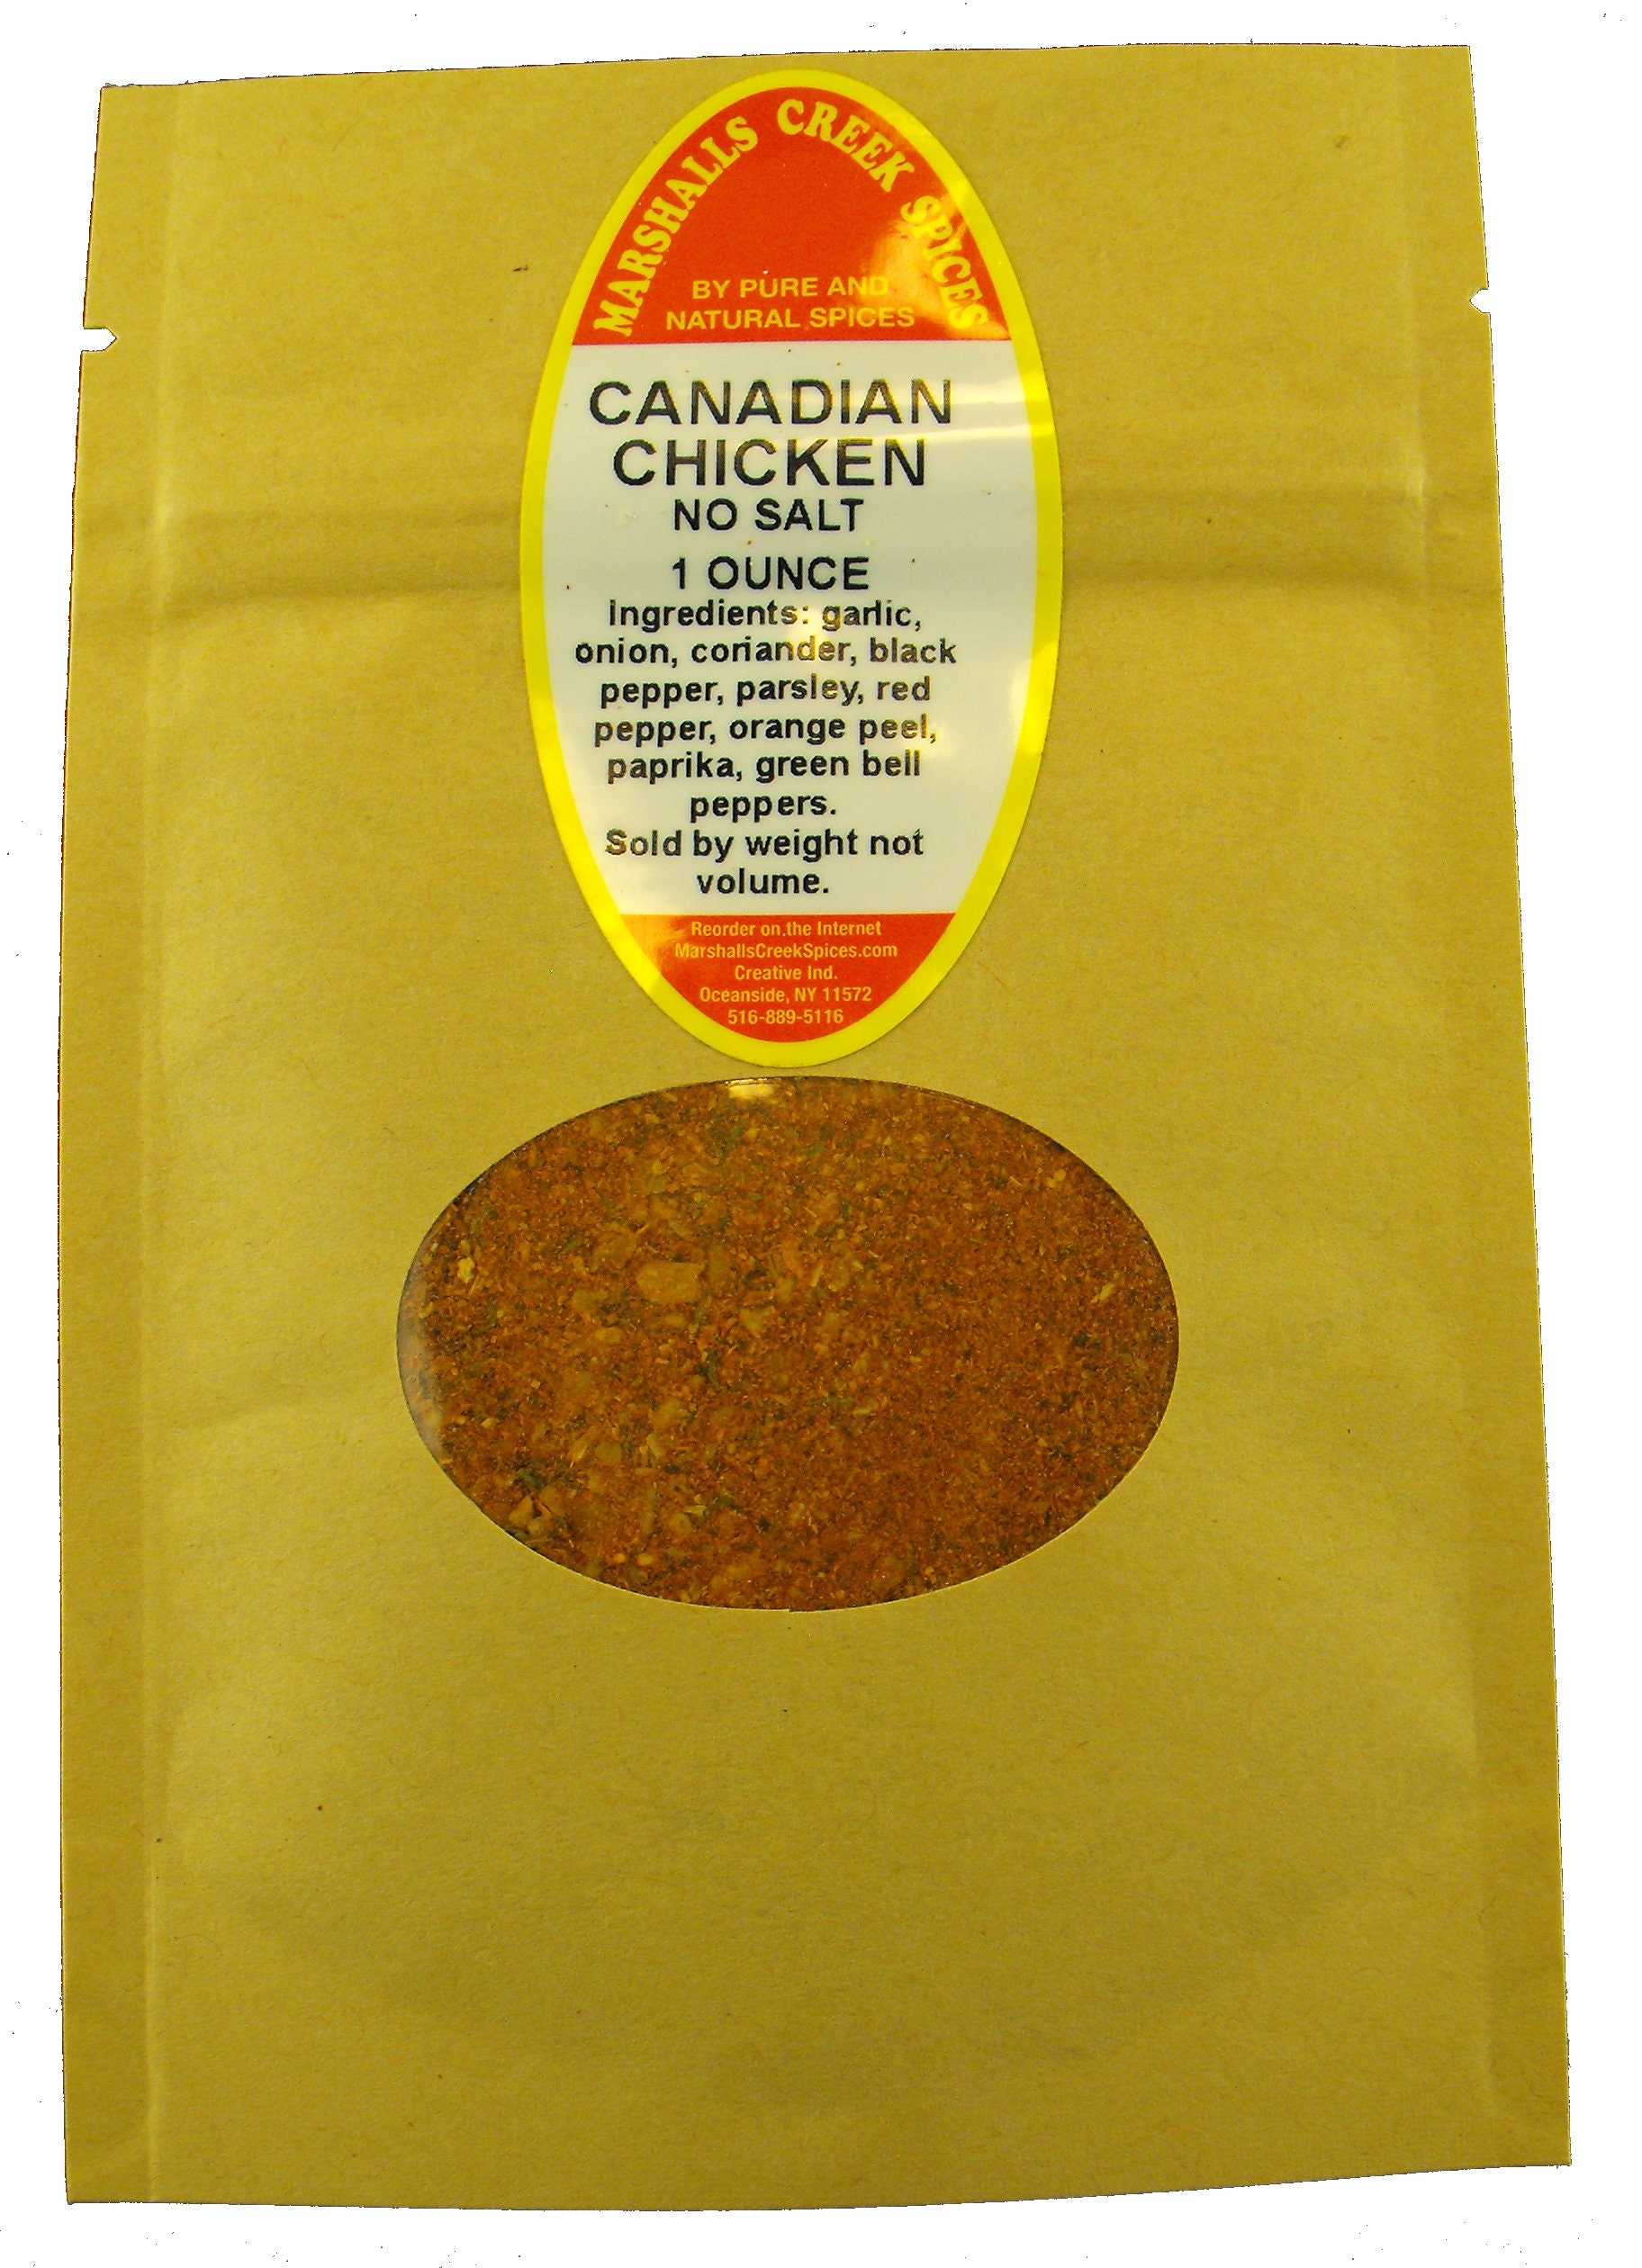 Marshalls Creek Spices (12 Pack) CAJUN SEASONING NO SALT REFILL